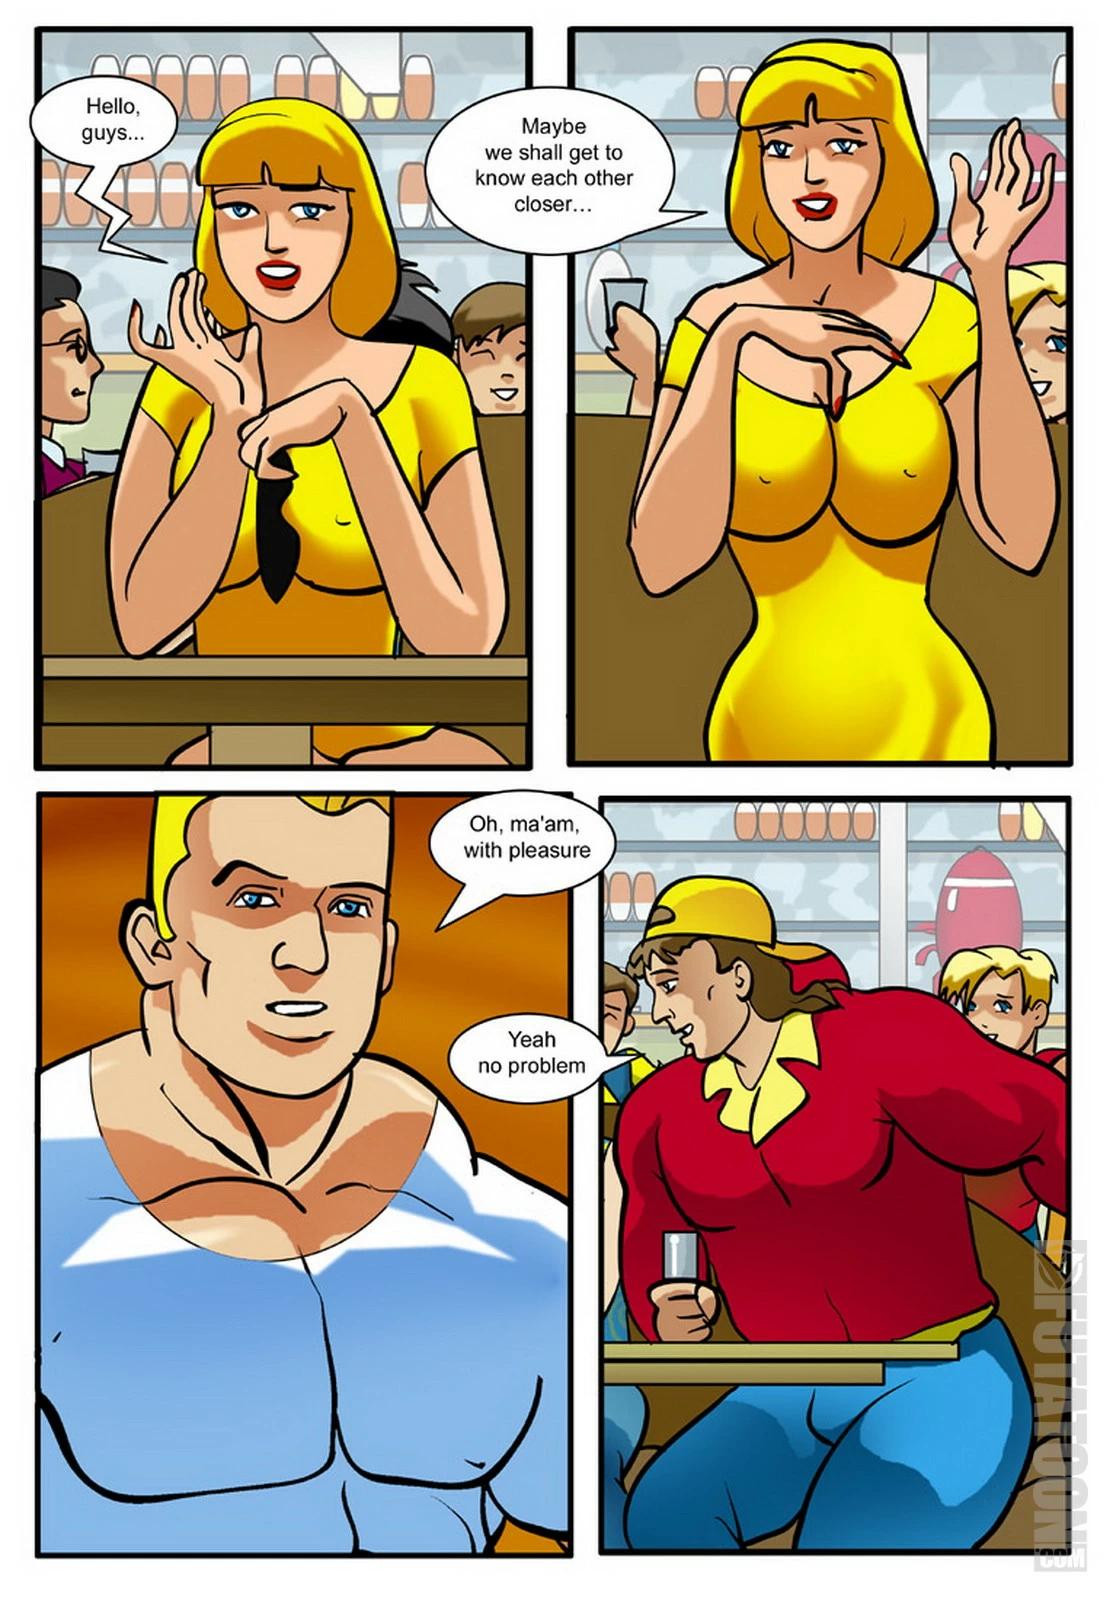 futanari threesome comics big boobs